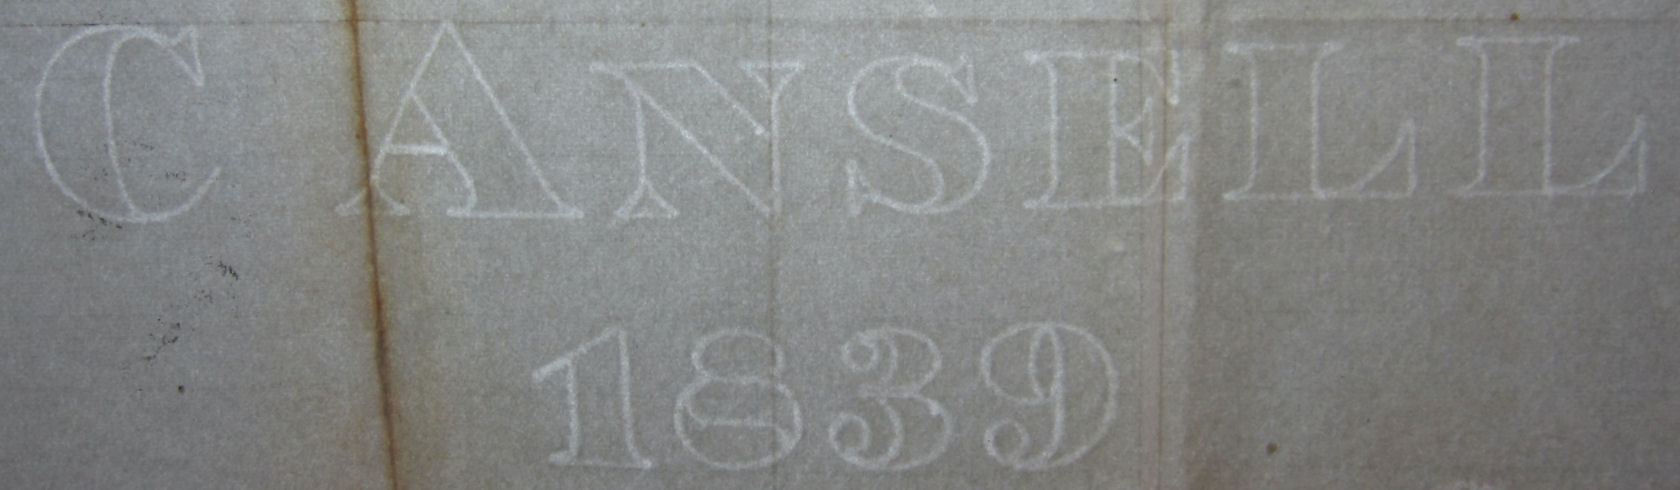 C.Ansell watermark of 1839